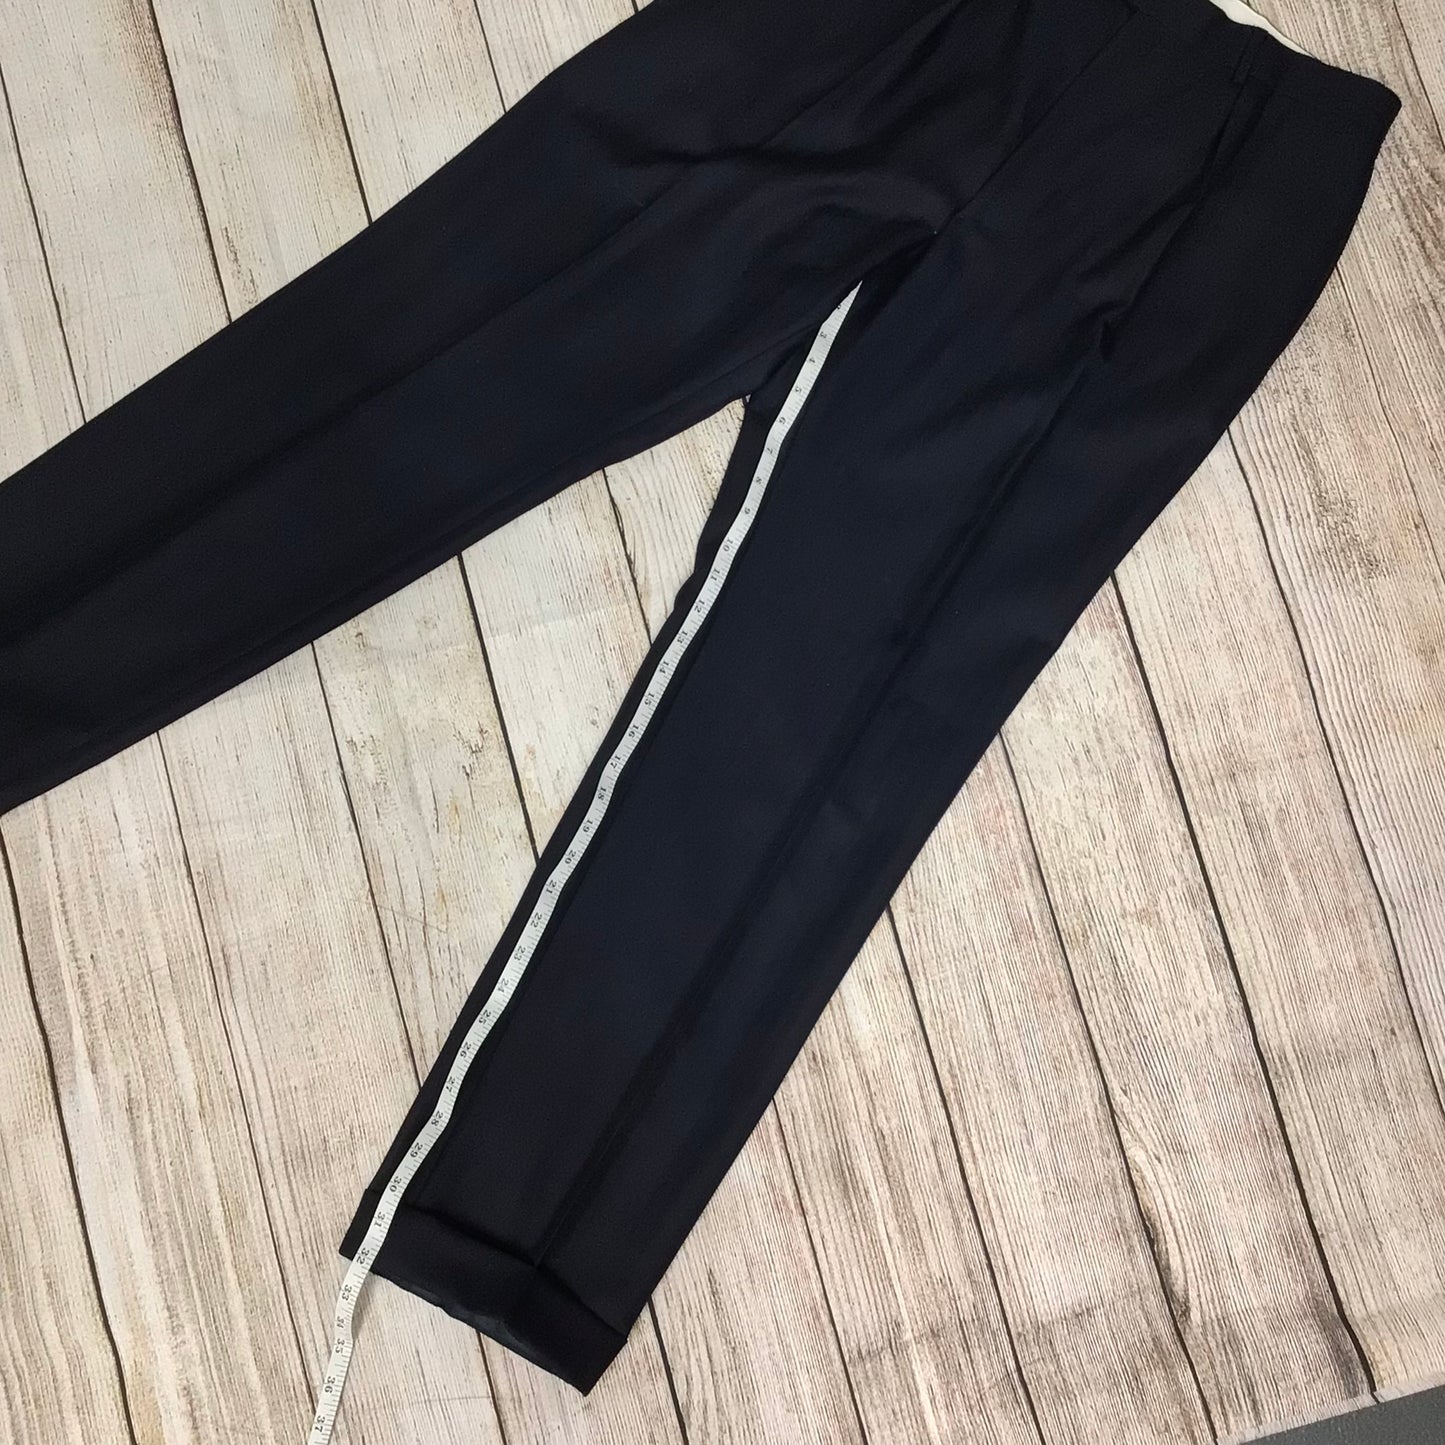 Aquascutum Black Trousers Size 34R